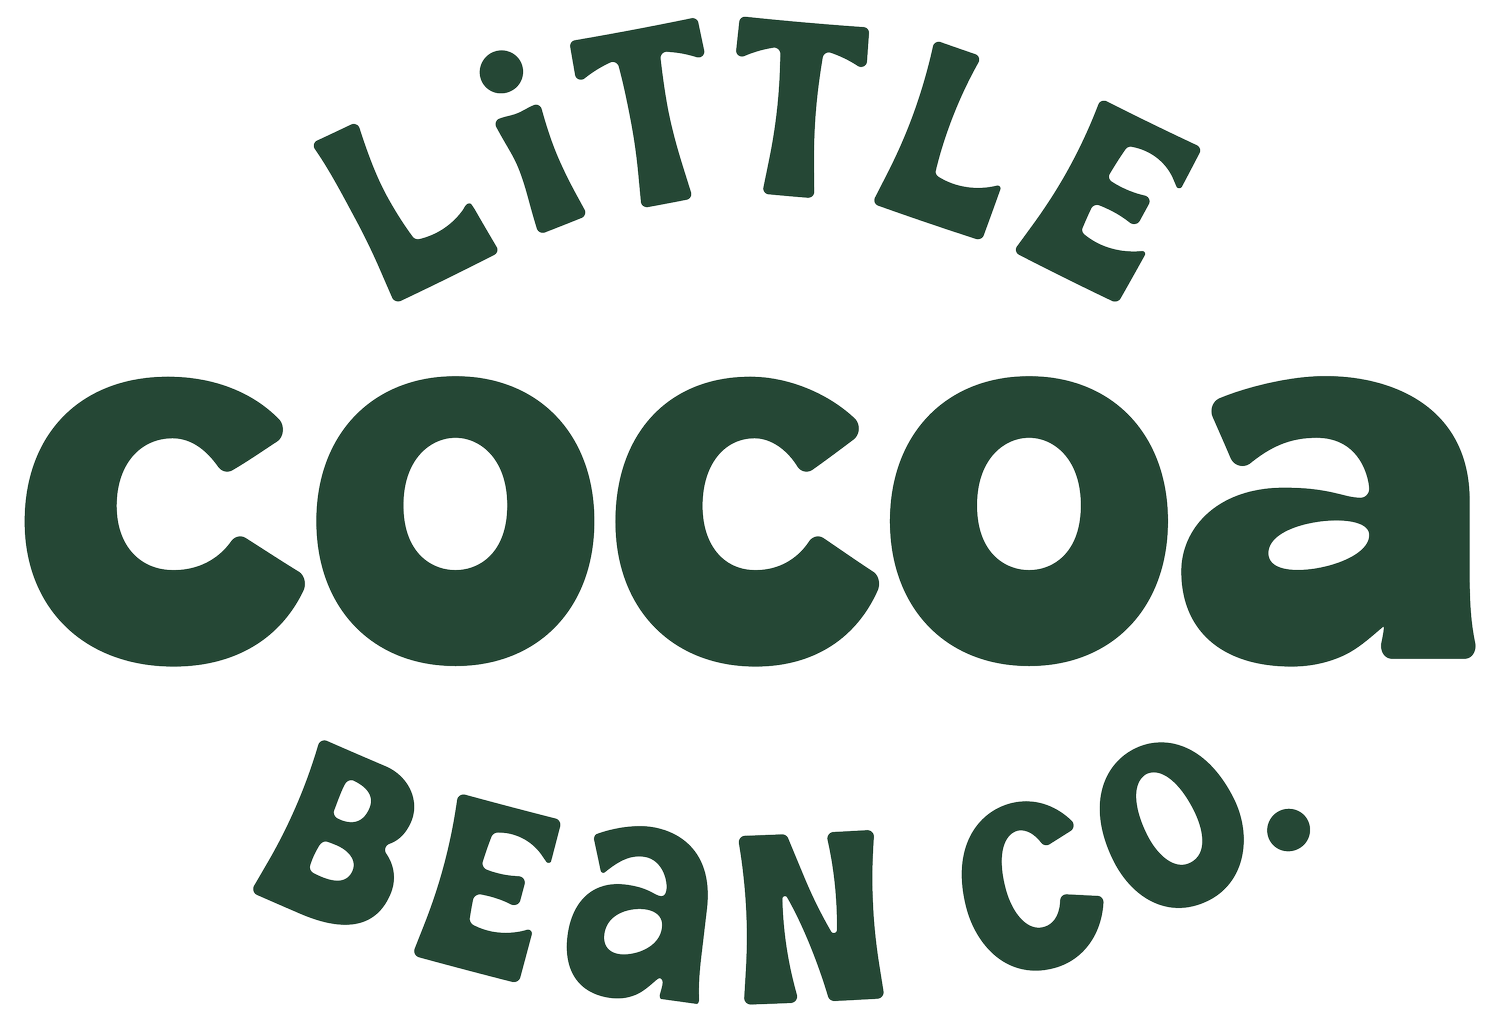 Little Cocoa Bean Company